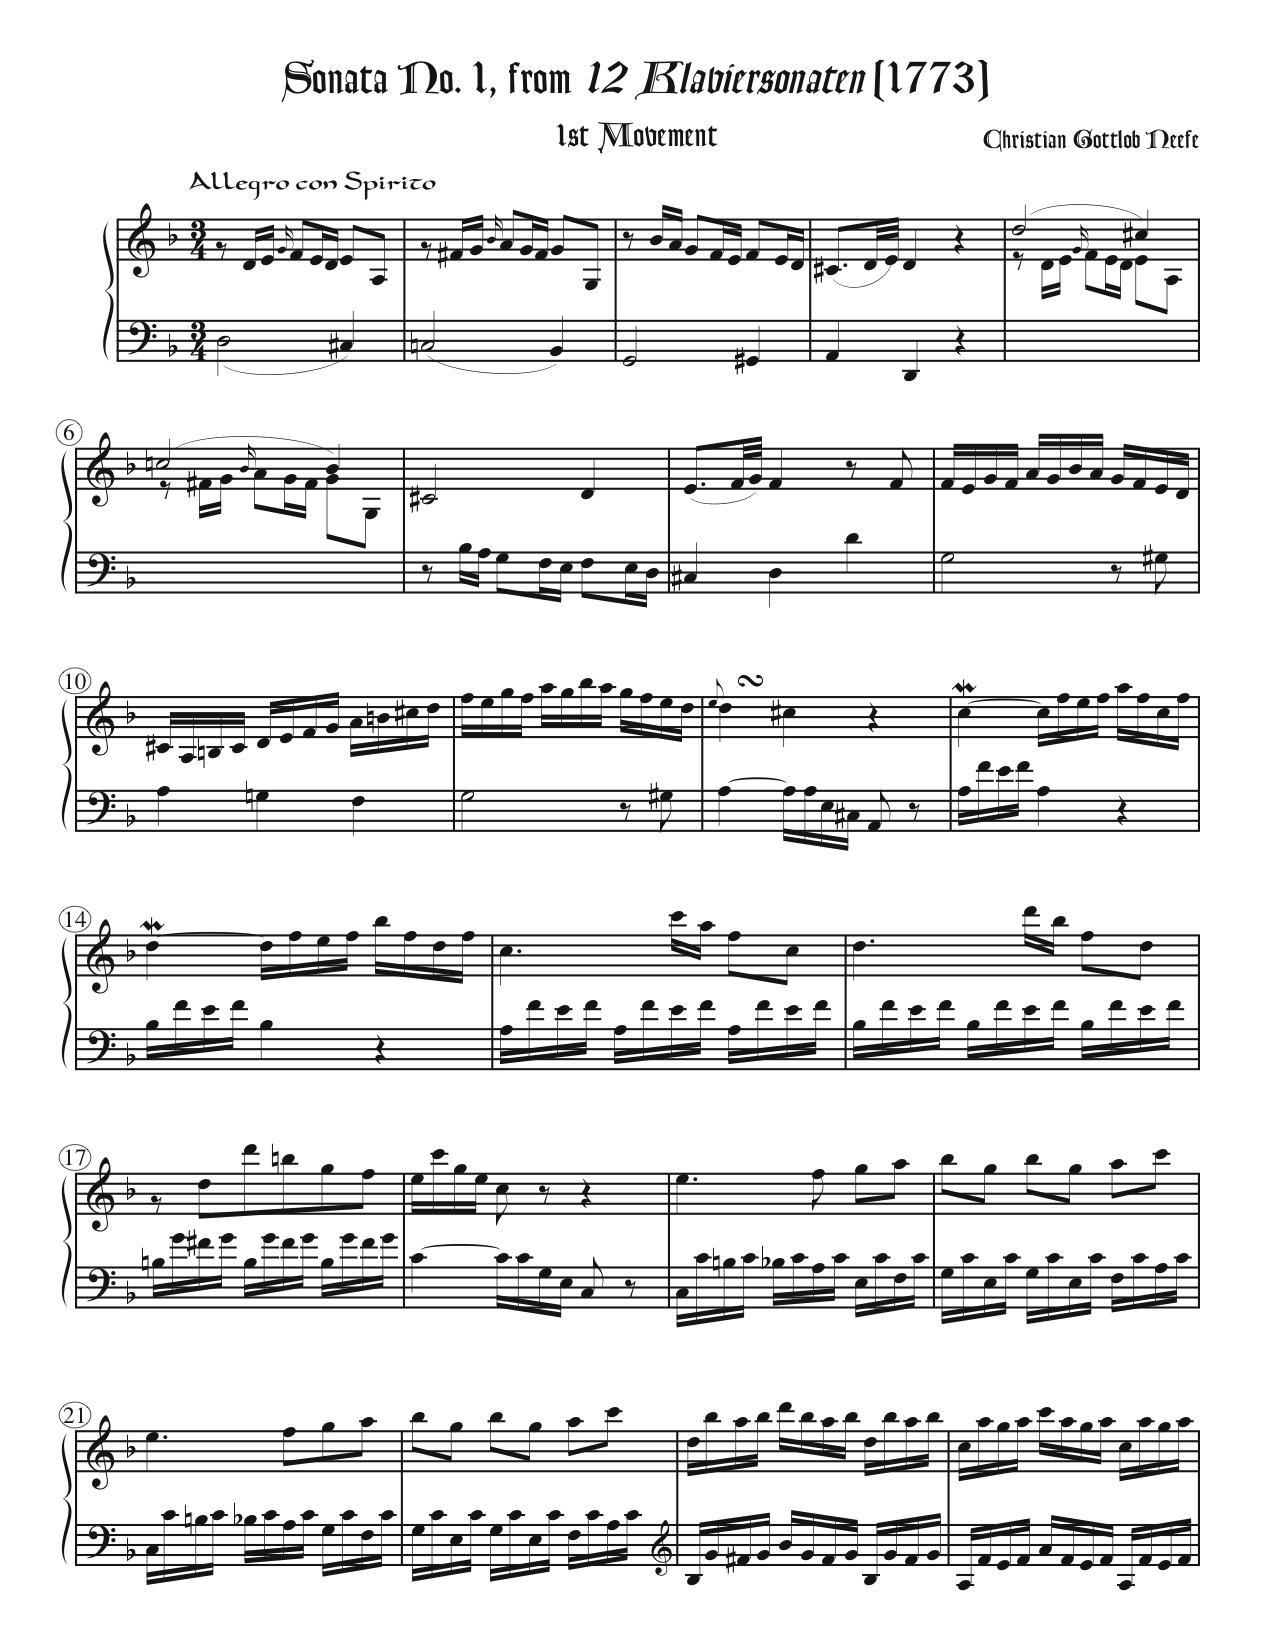 No. 1 from *12 Sonaten* (1773)